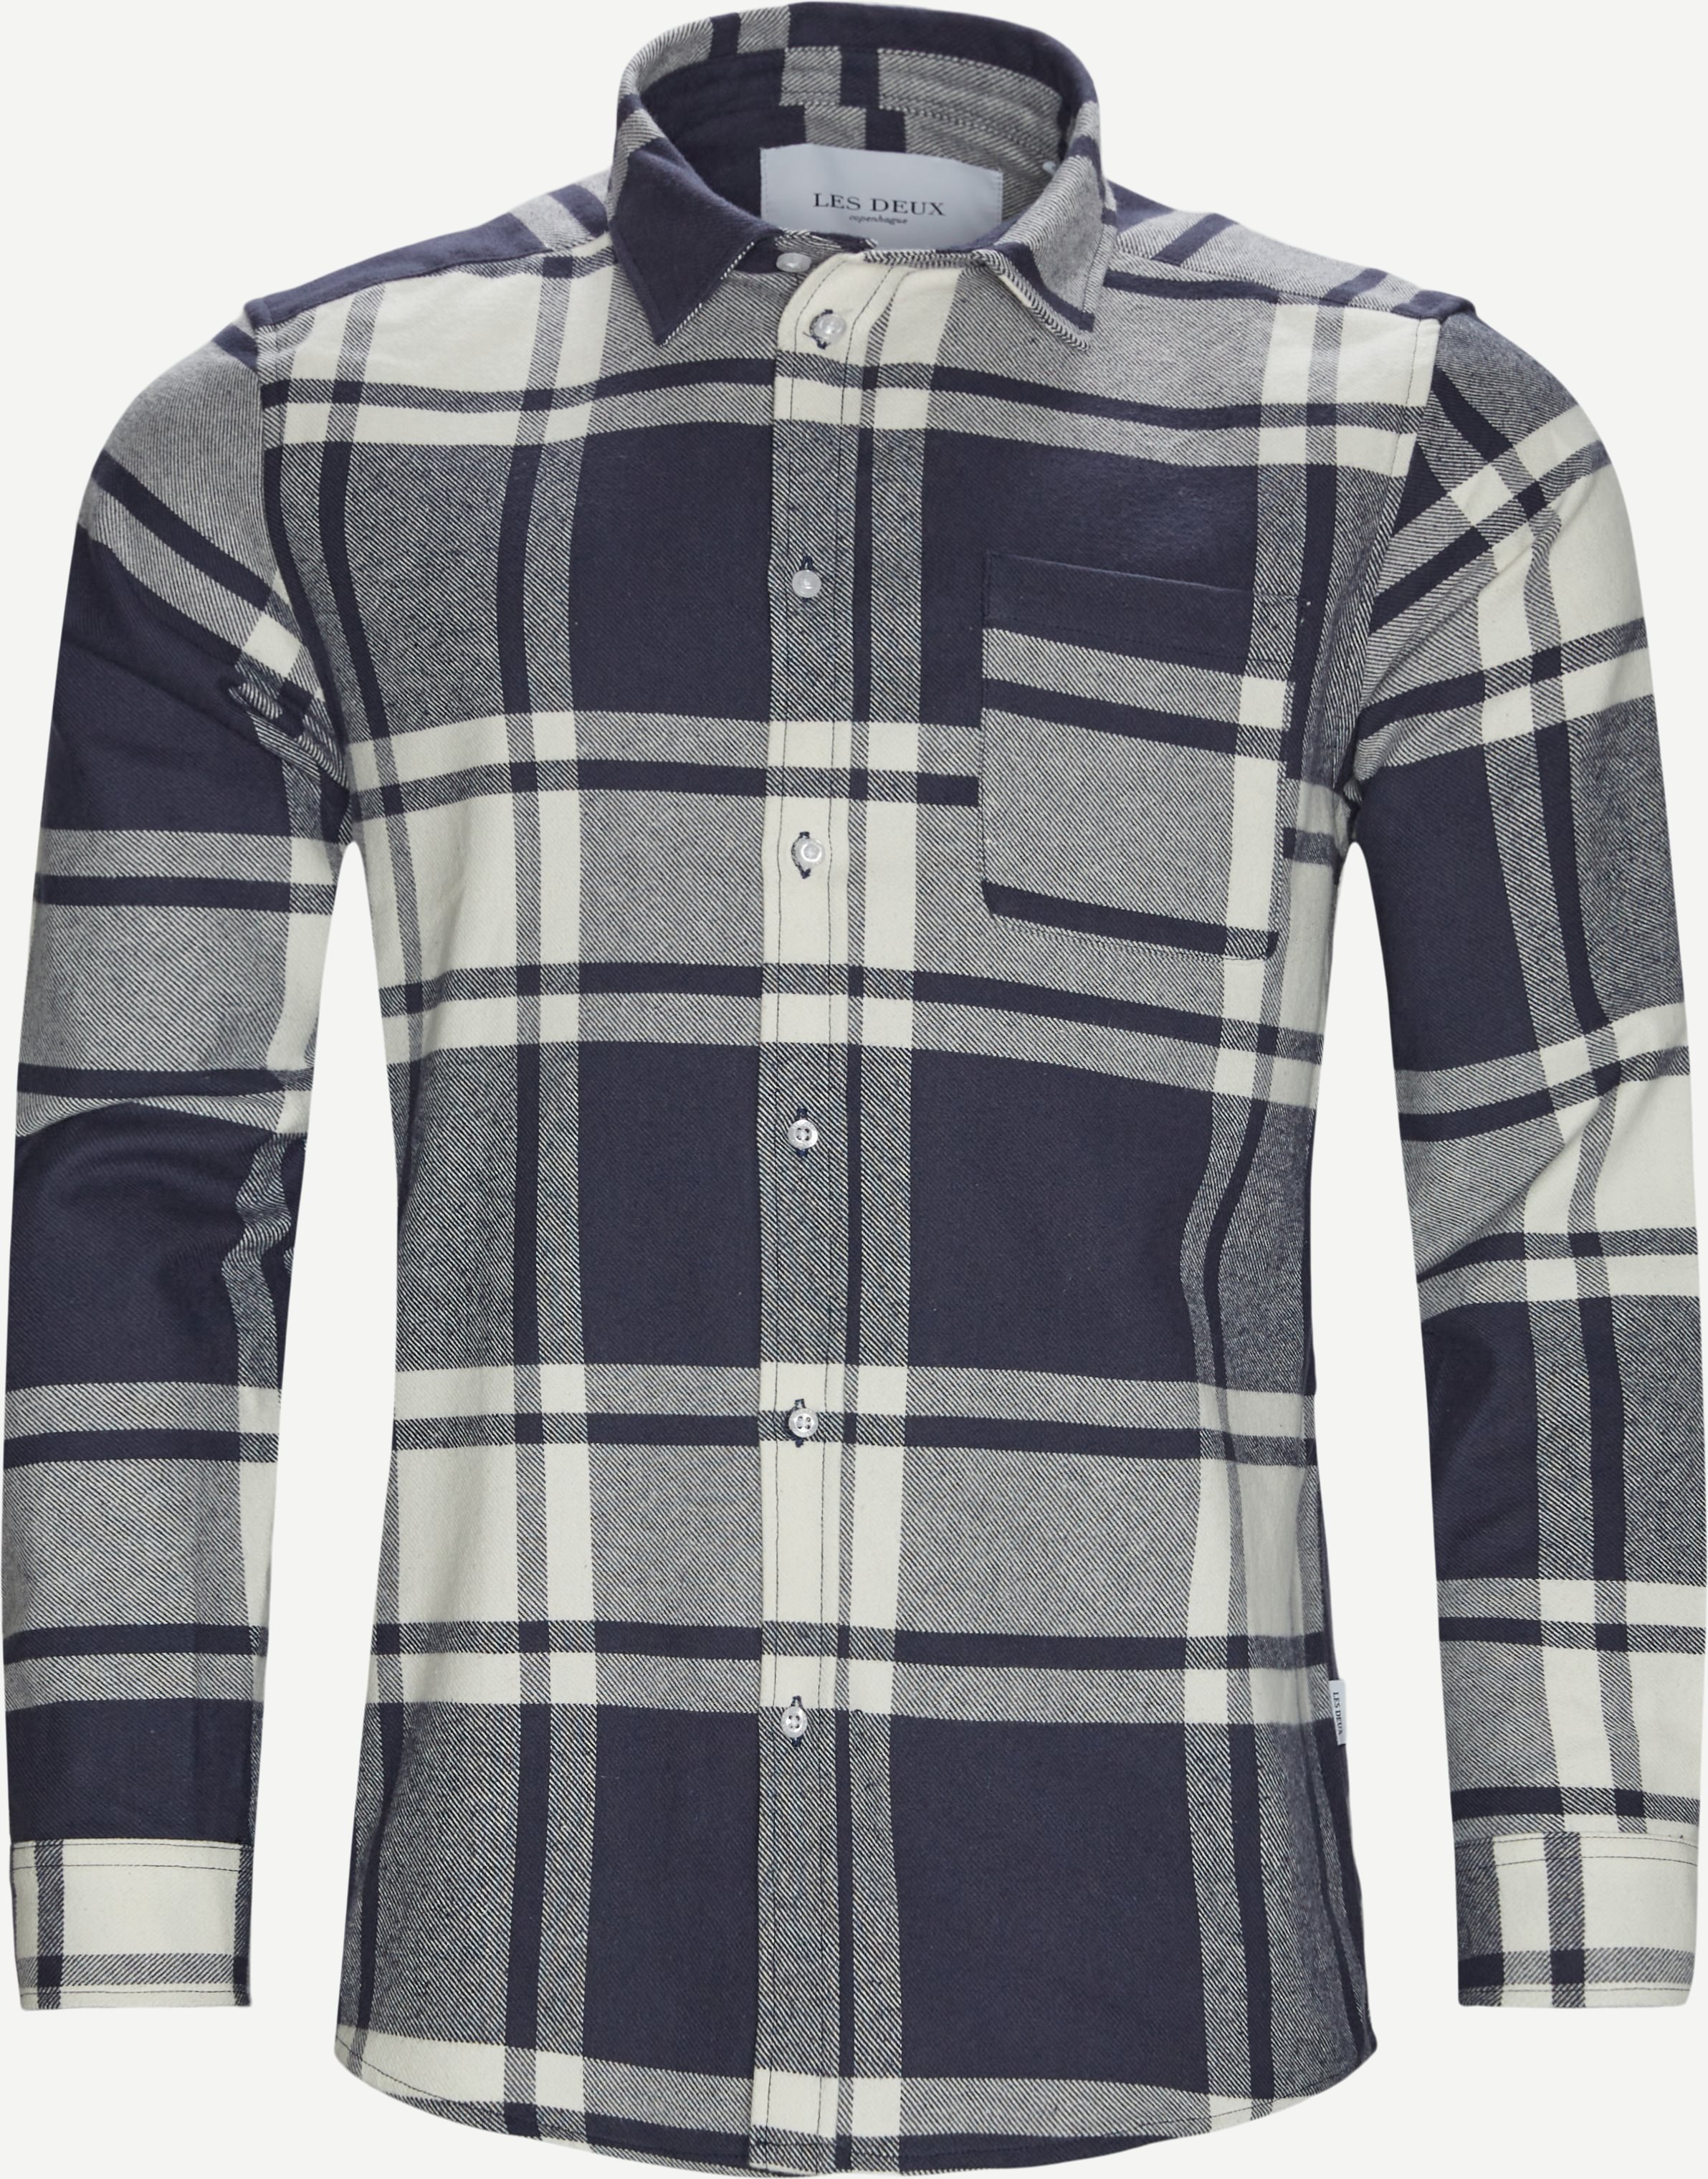 Jeremy Check Flannel Shirt - Shirts - Regular fit - Blue